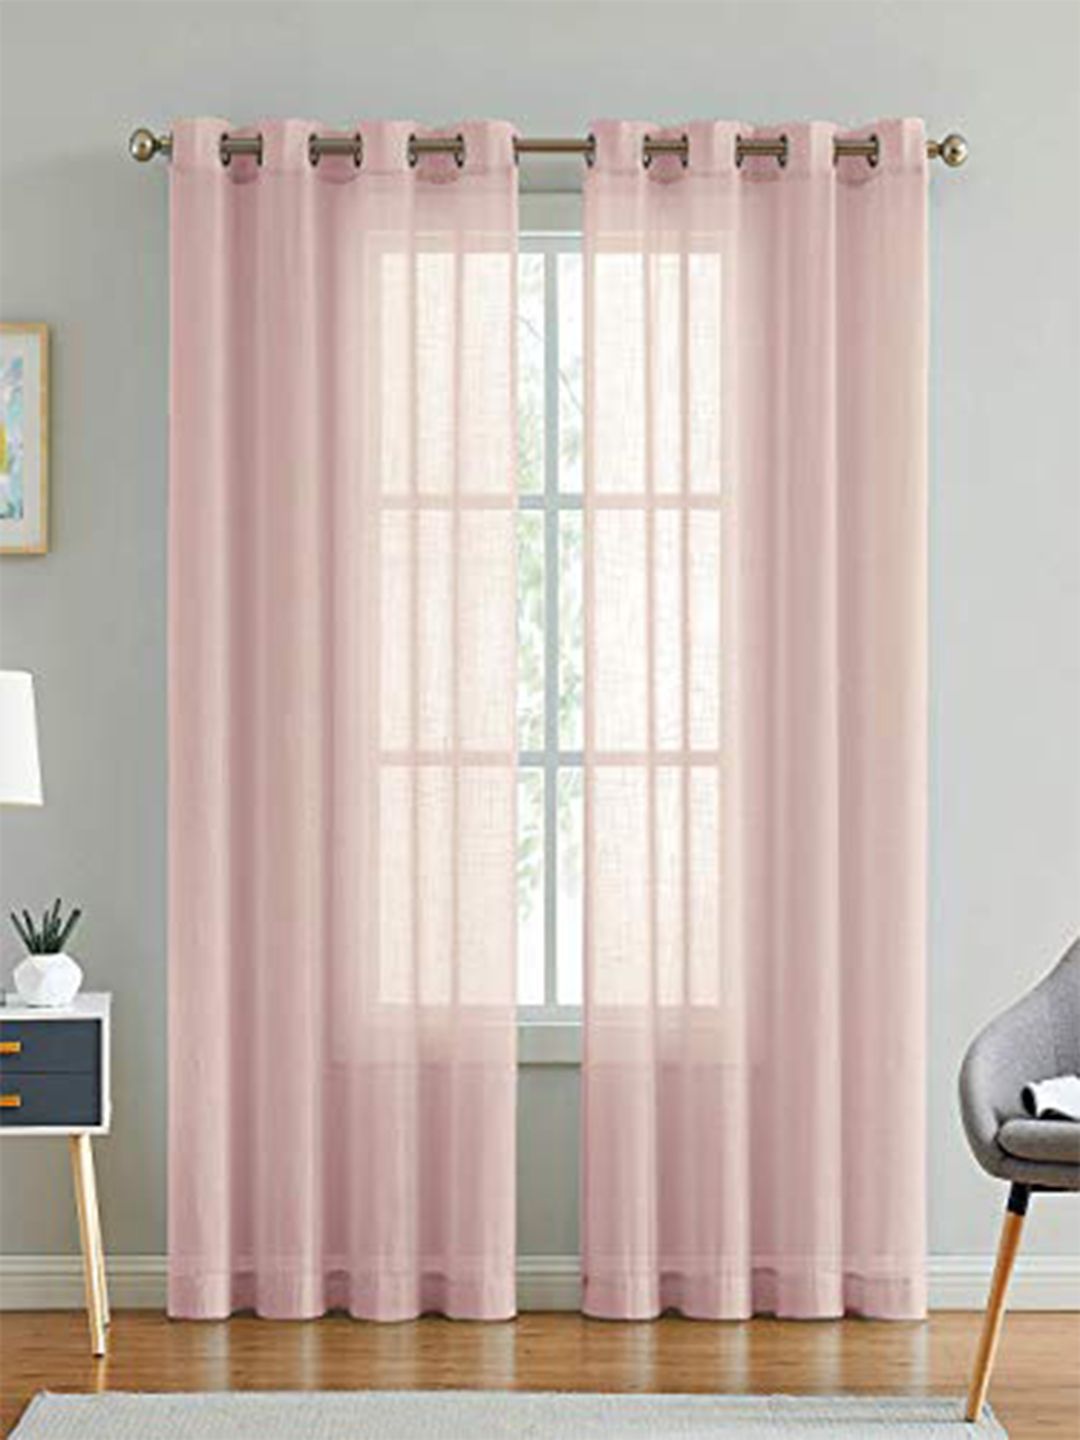 LINENWALAS Happy Sleeping Set Of 2 Pink Window Sheer Curtains Price in India